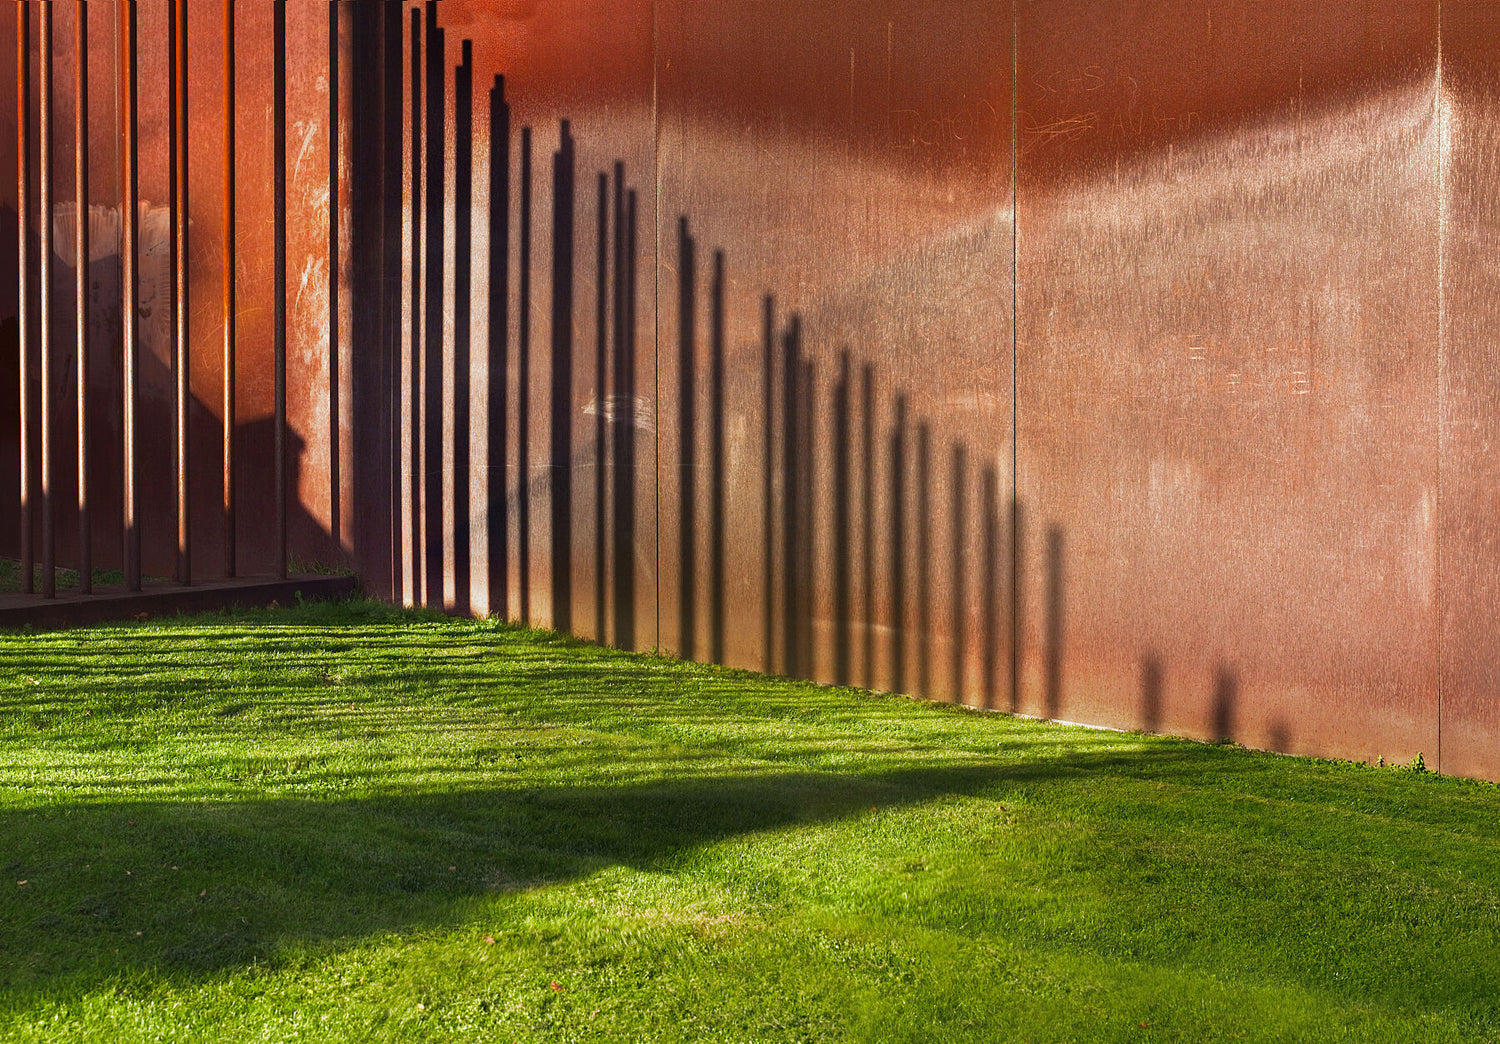 Beyond the Wall - Berlin Wall Memorial - Horizon - color - C-type Fudji Flex - (Limited edition 1-4)